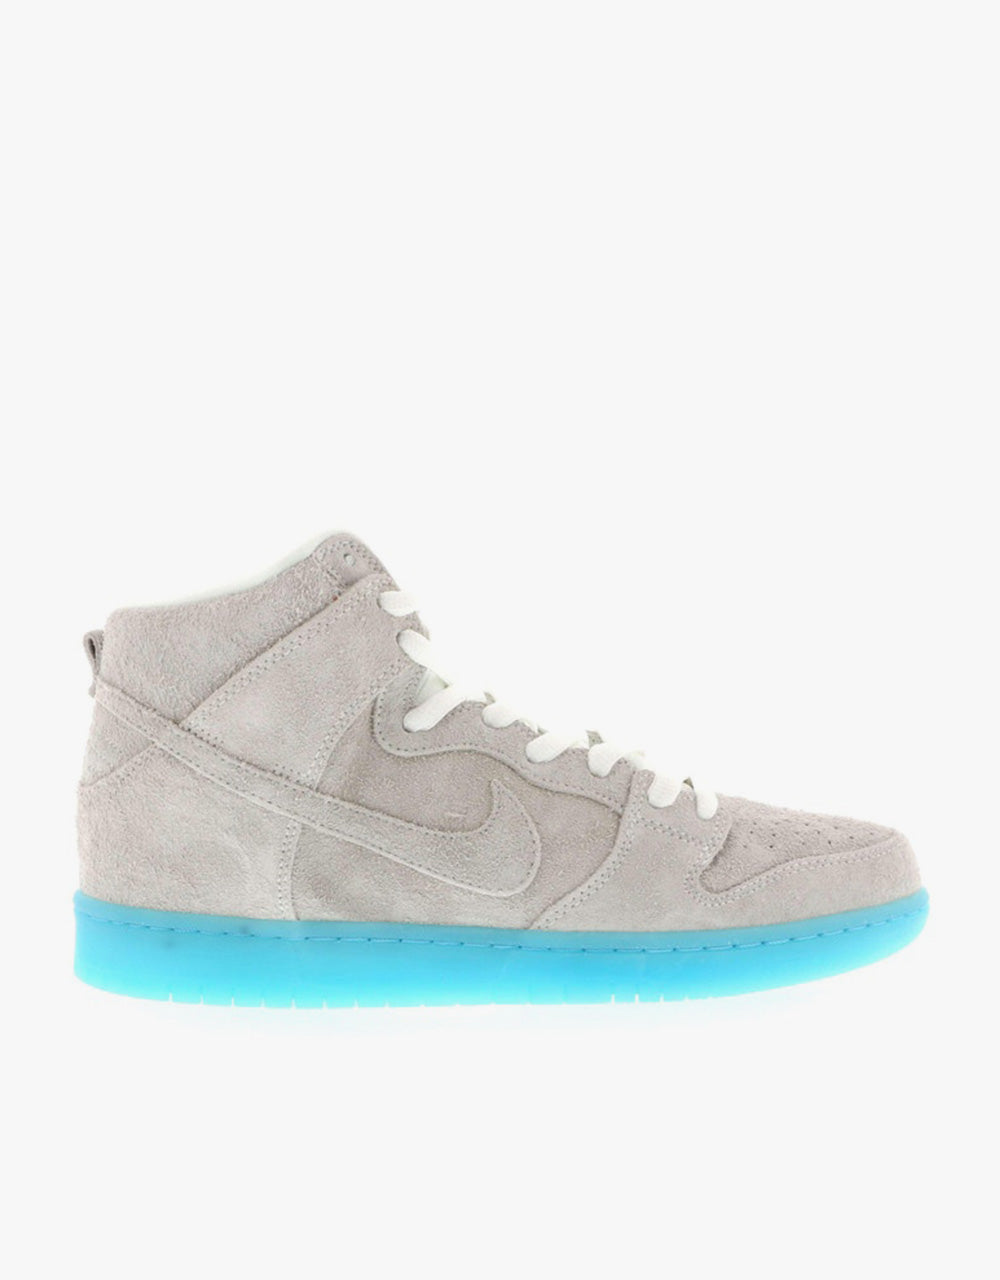 Nike SB Dunk High Premium Skate Shoes - White/White/Polorized Blue